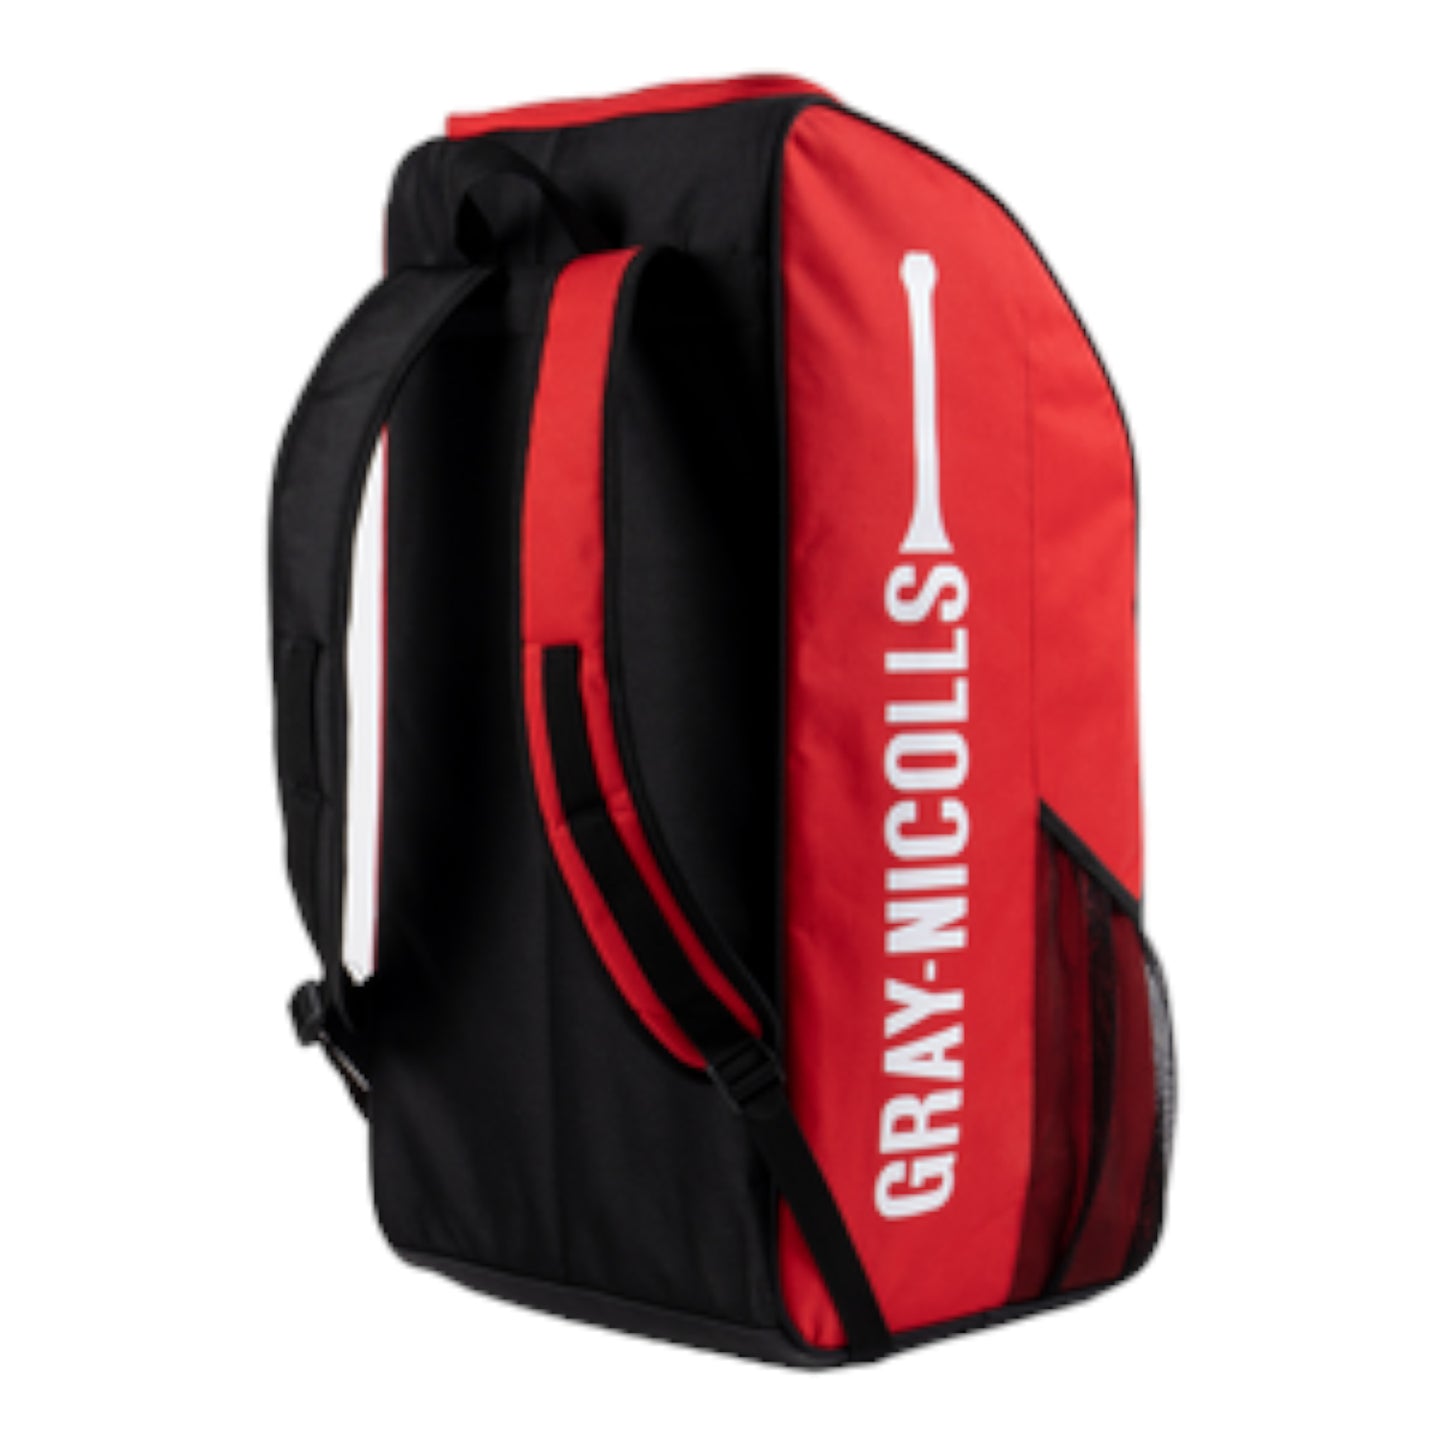 GN Academy 1.1 Duffle Cricket Bag